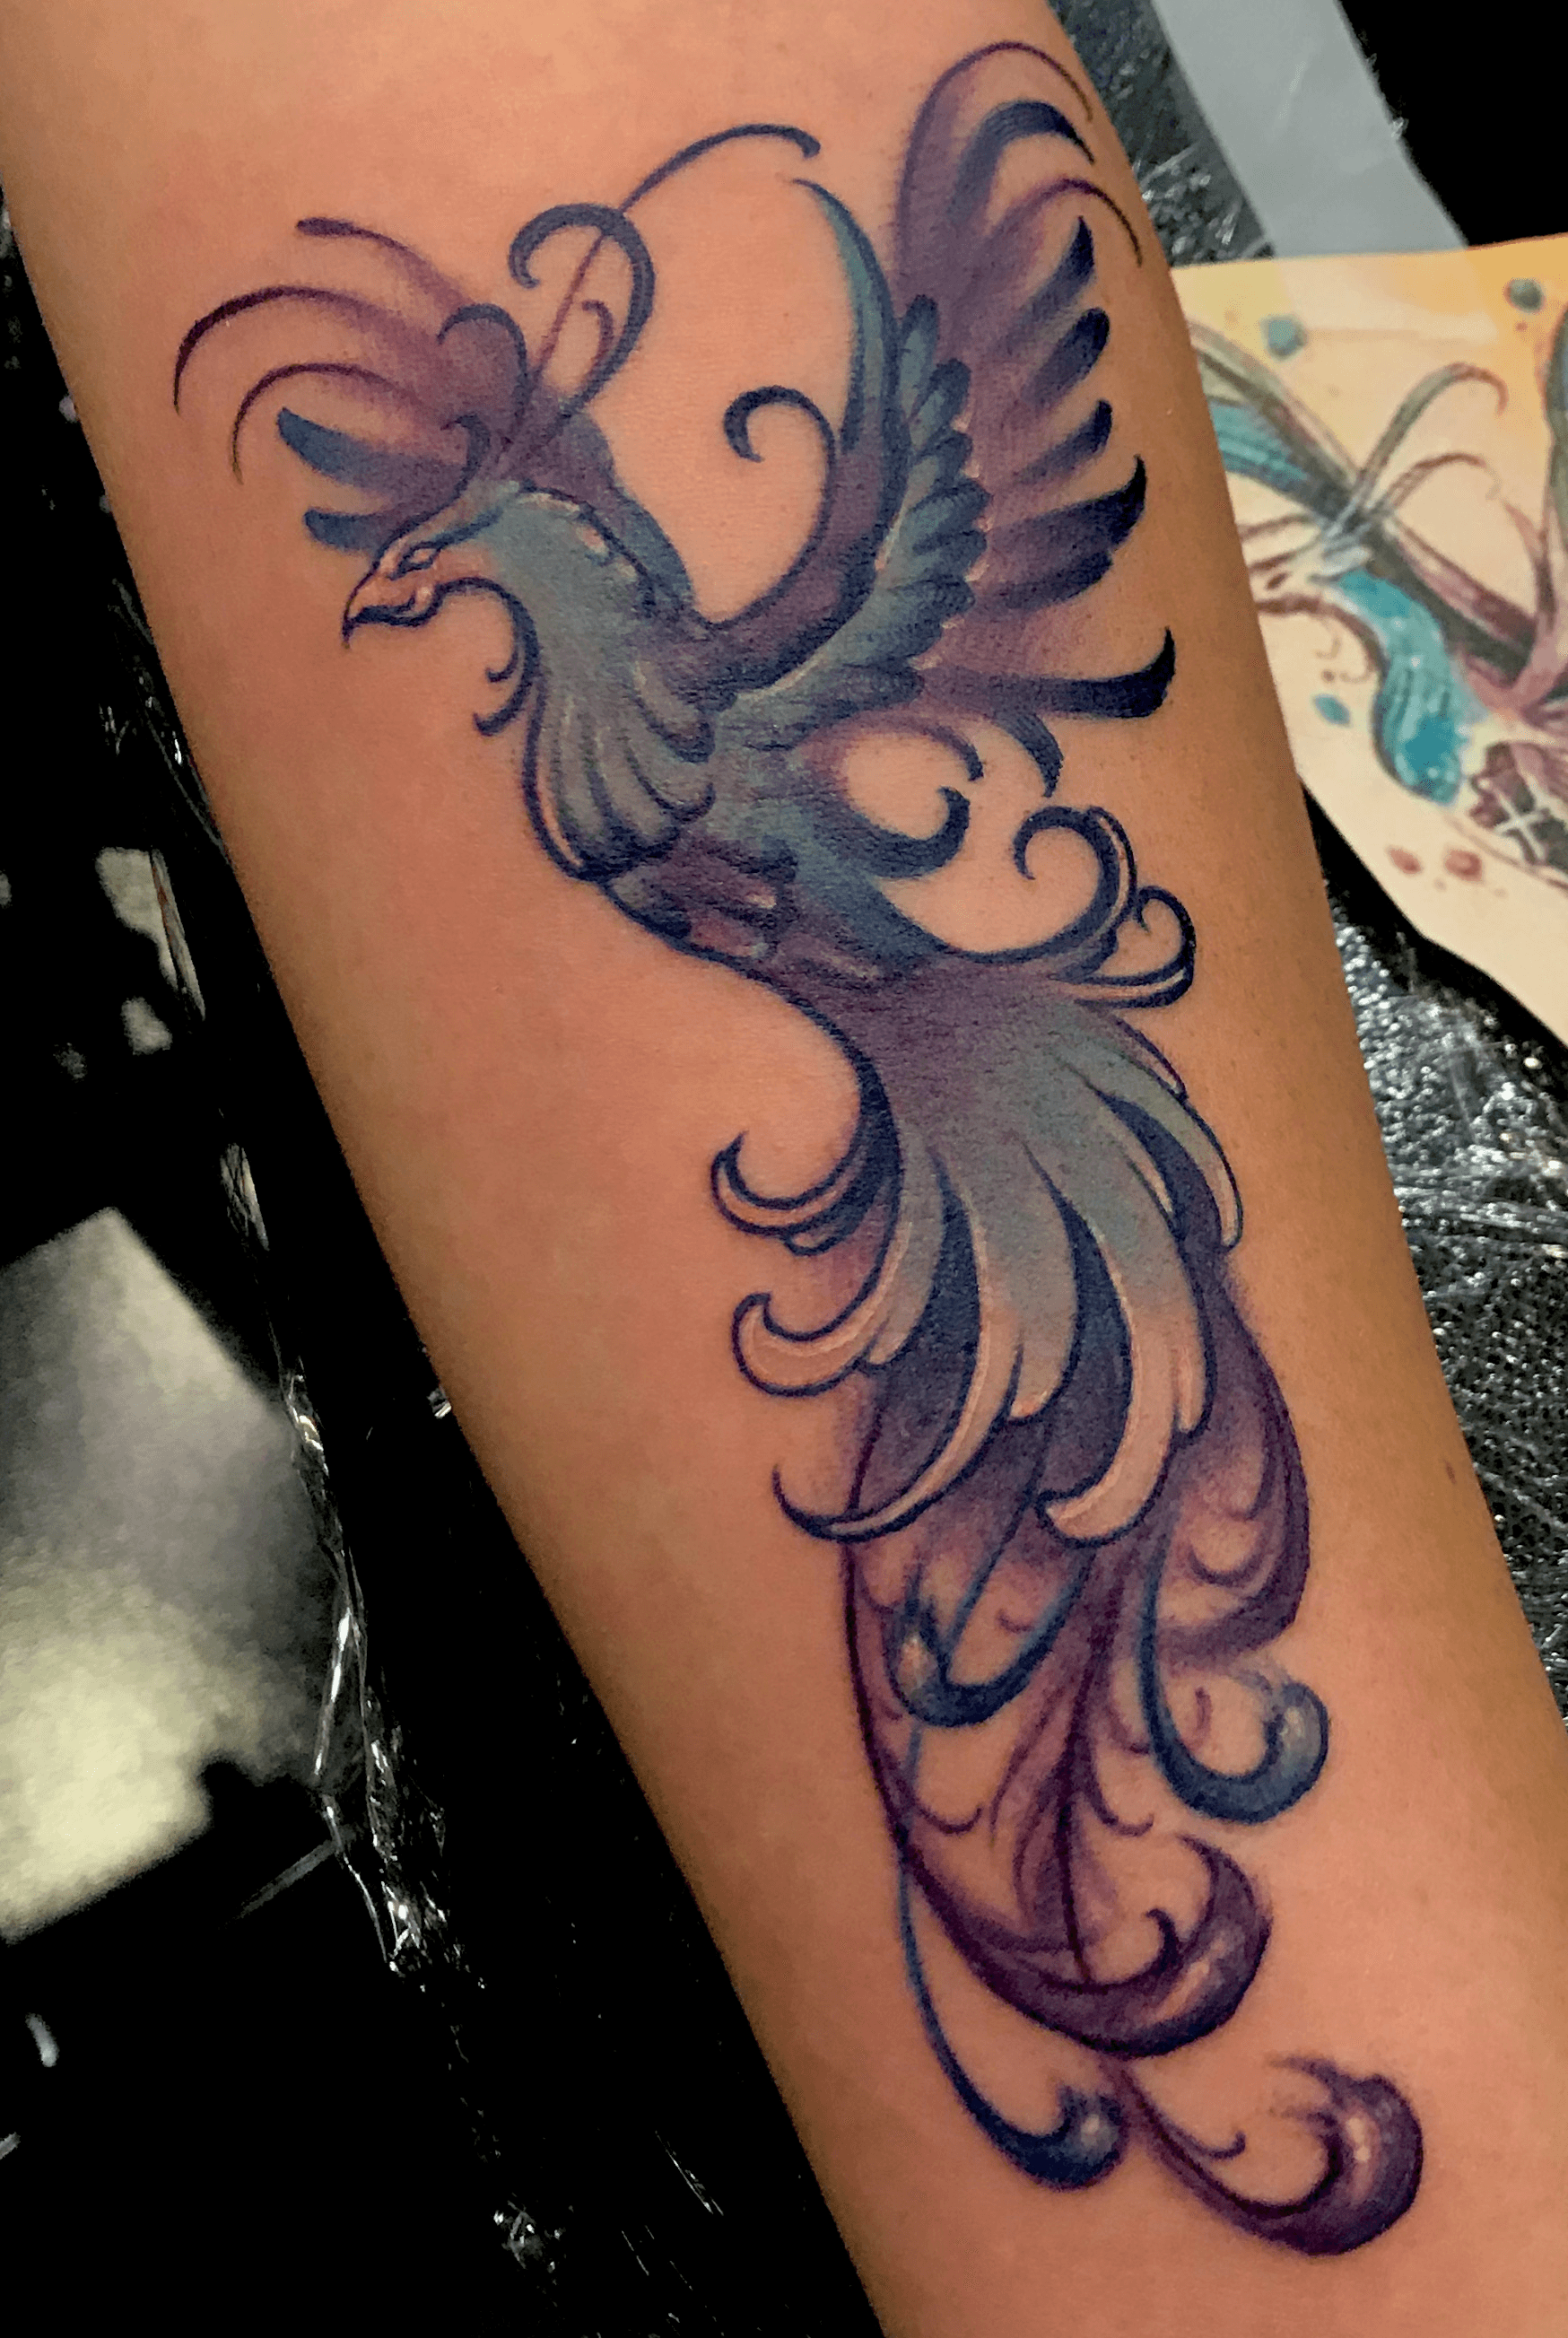 35 Phoenix Tattoos On Forearm